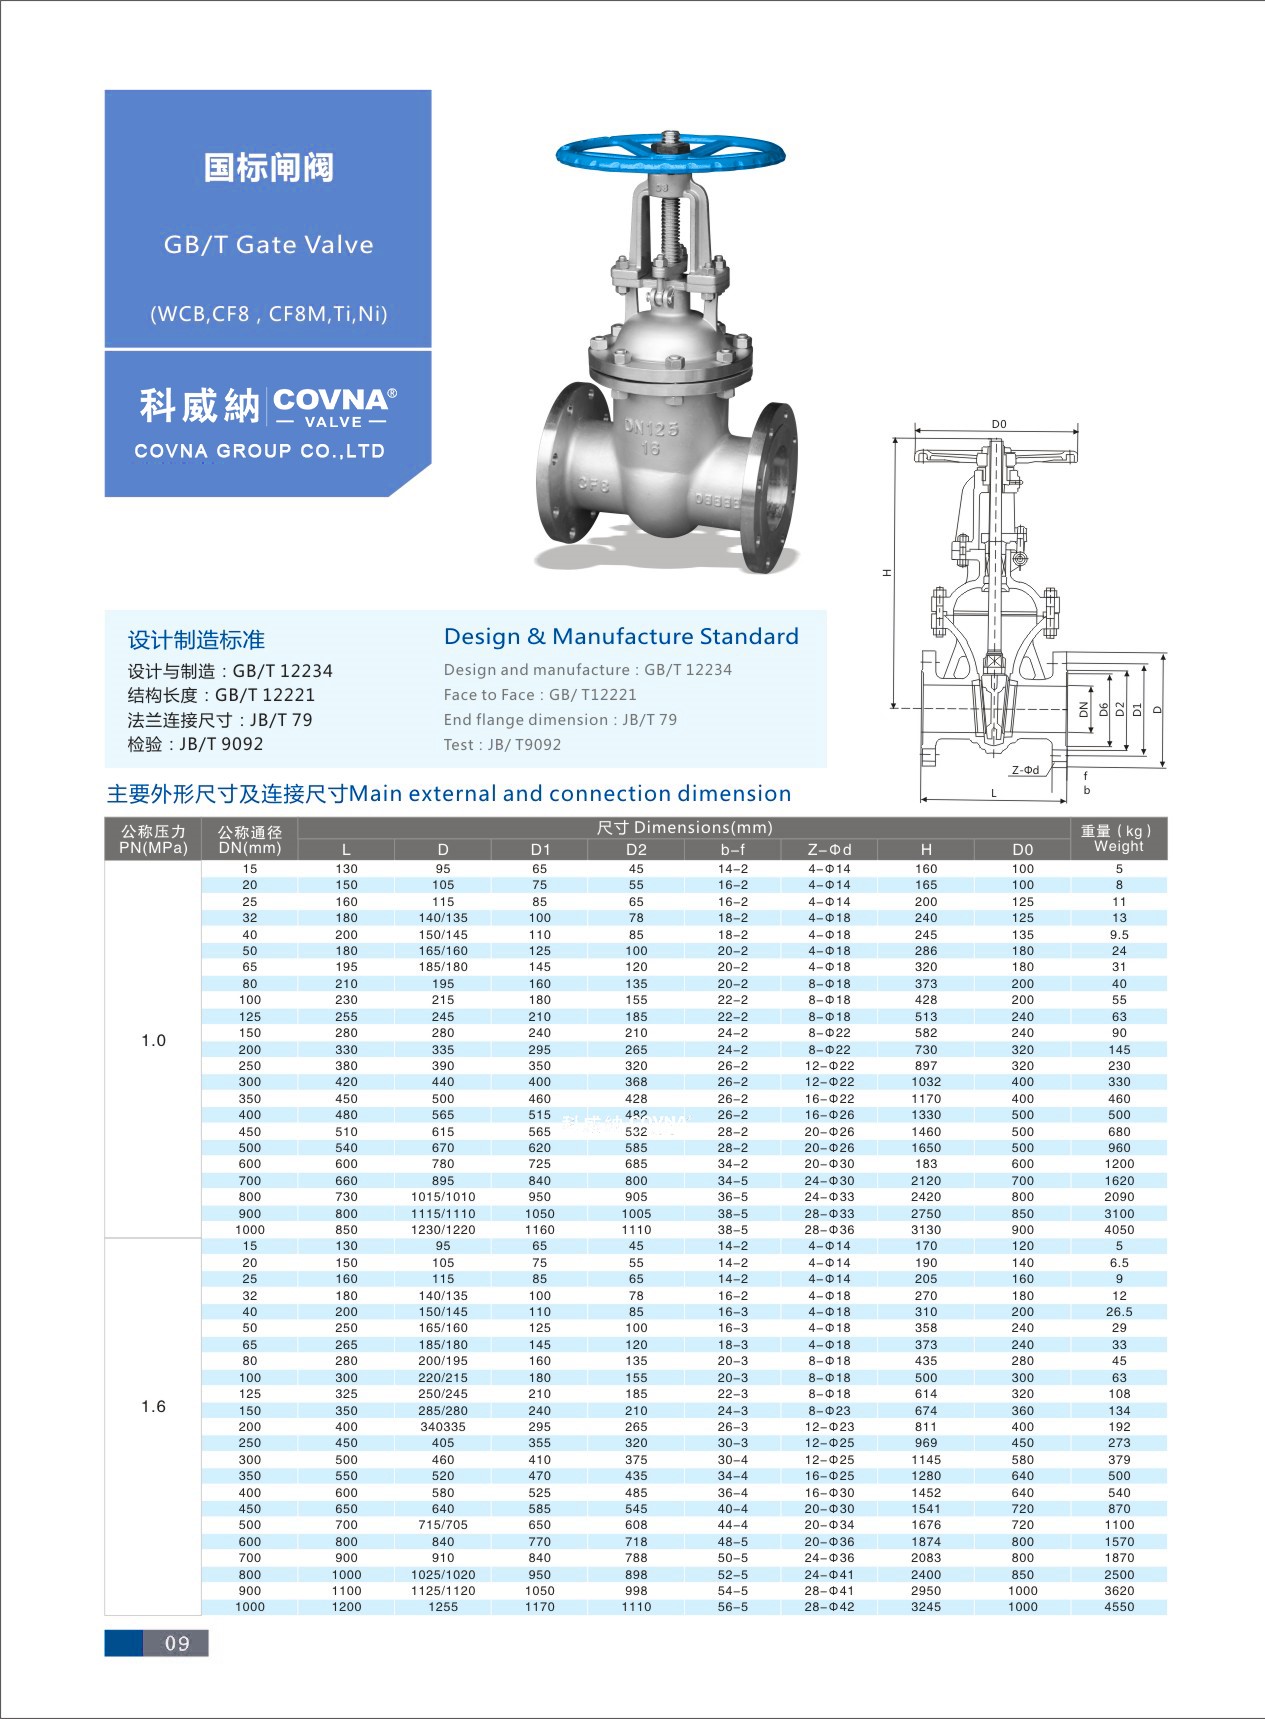 manual gate valve DIN 1